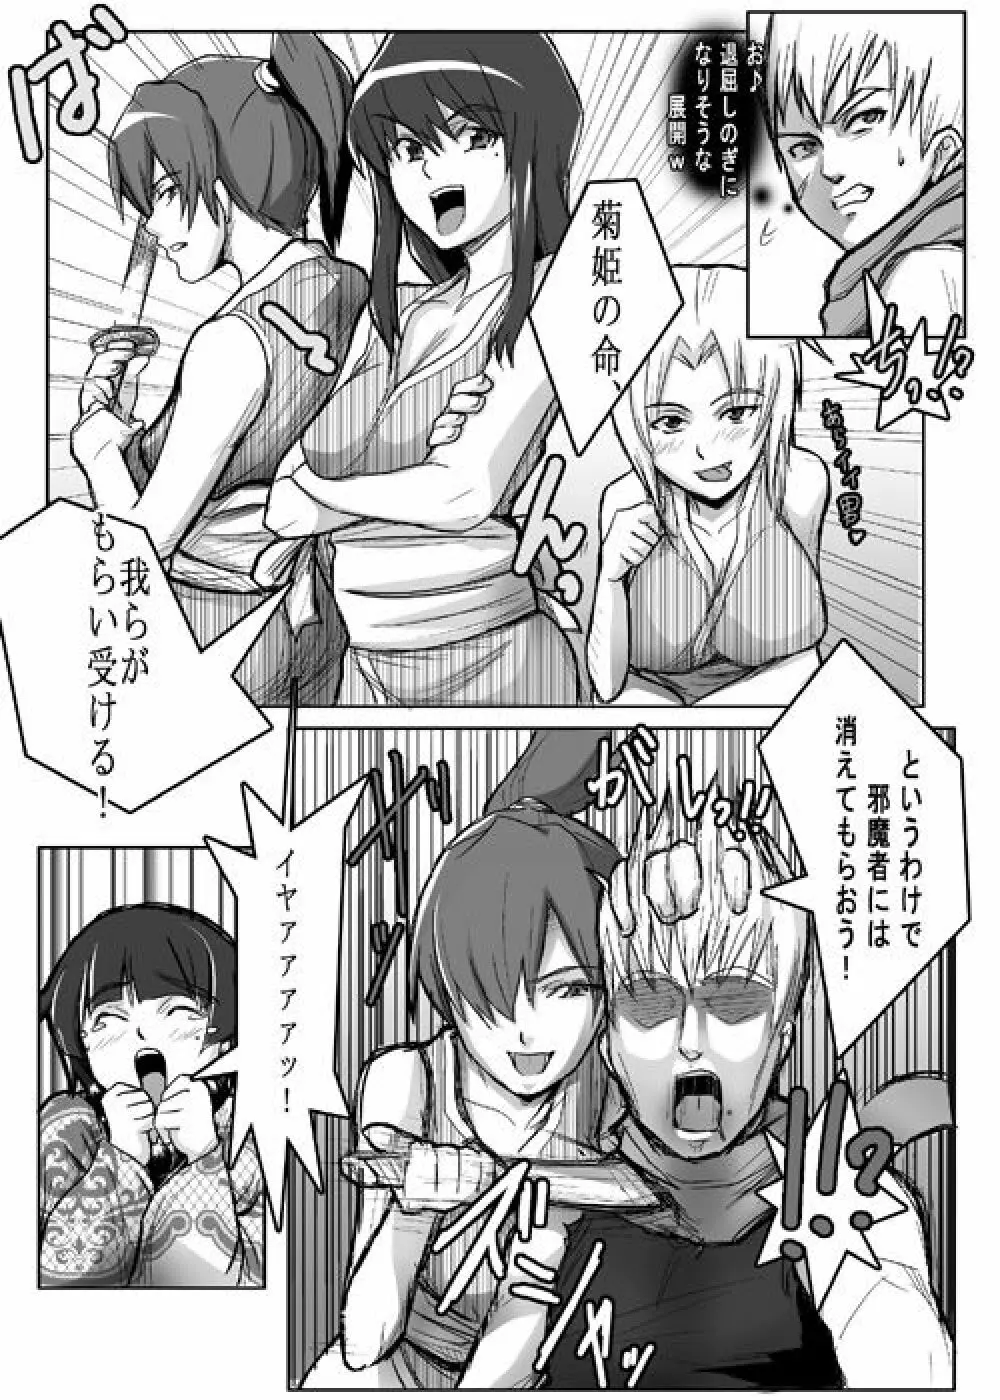 Same-themed manga about kid fighting female ninjas from japanese imageboard. 51ページ